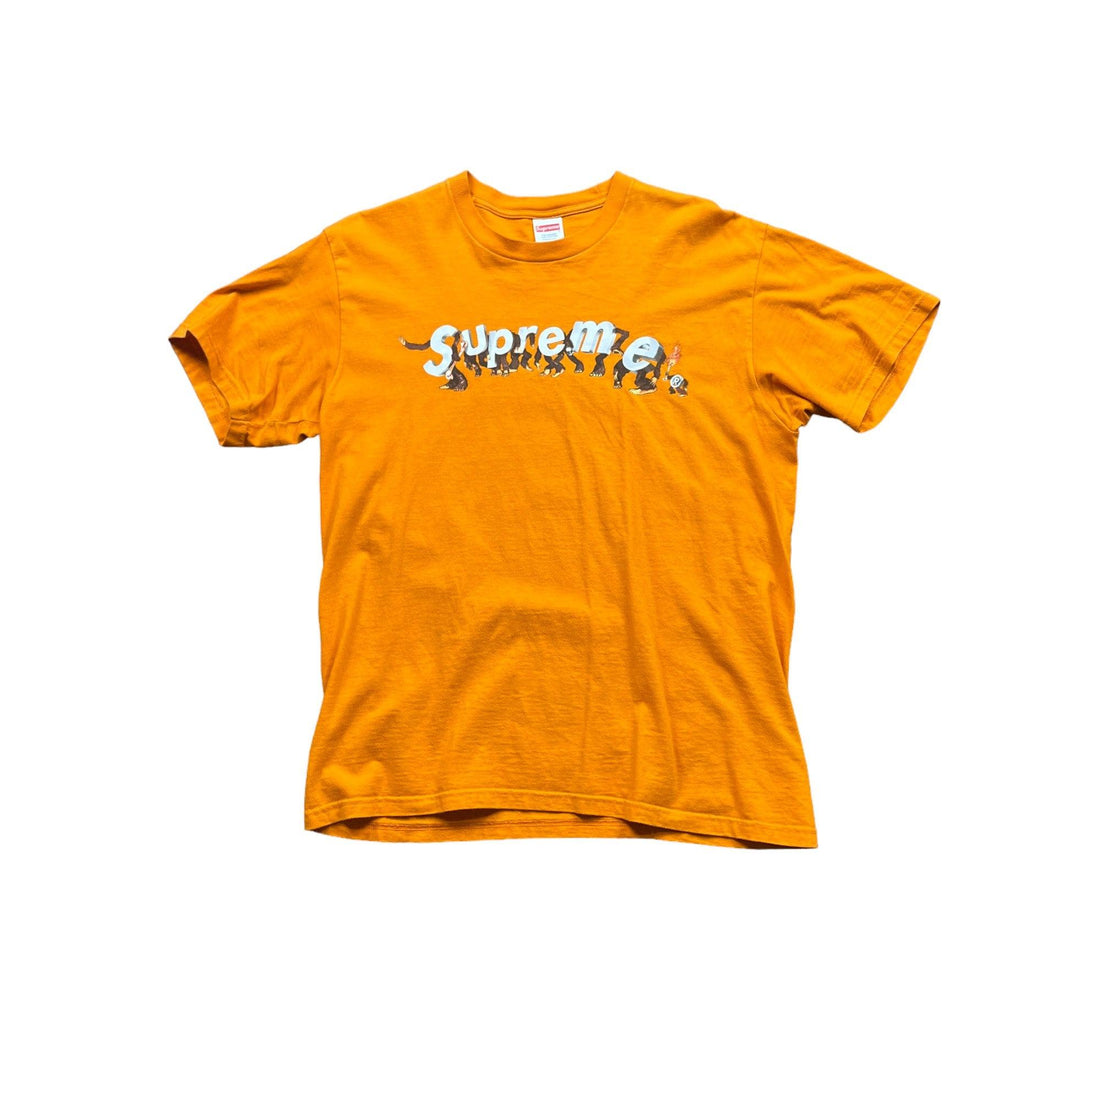 Orange Supreme Apes Tee - Medium - The Streetwear Studio